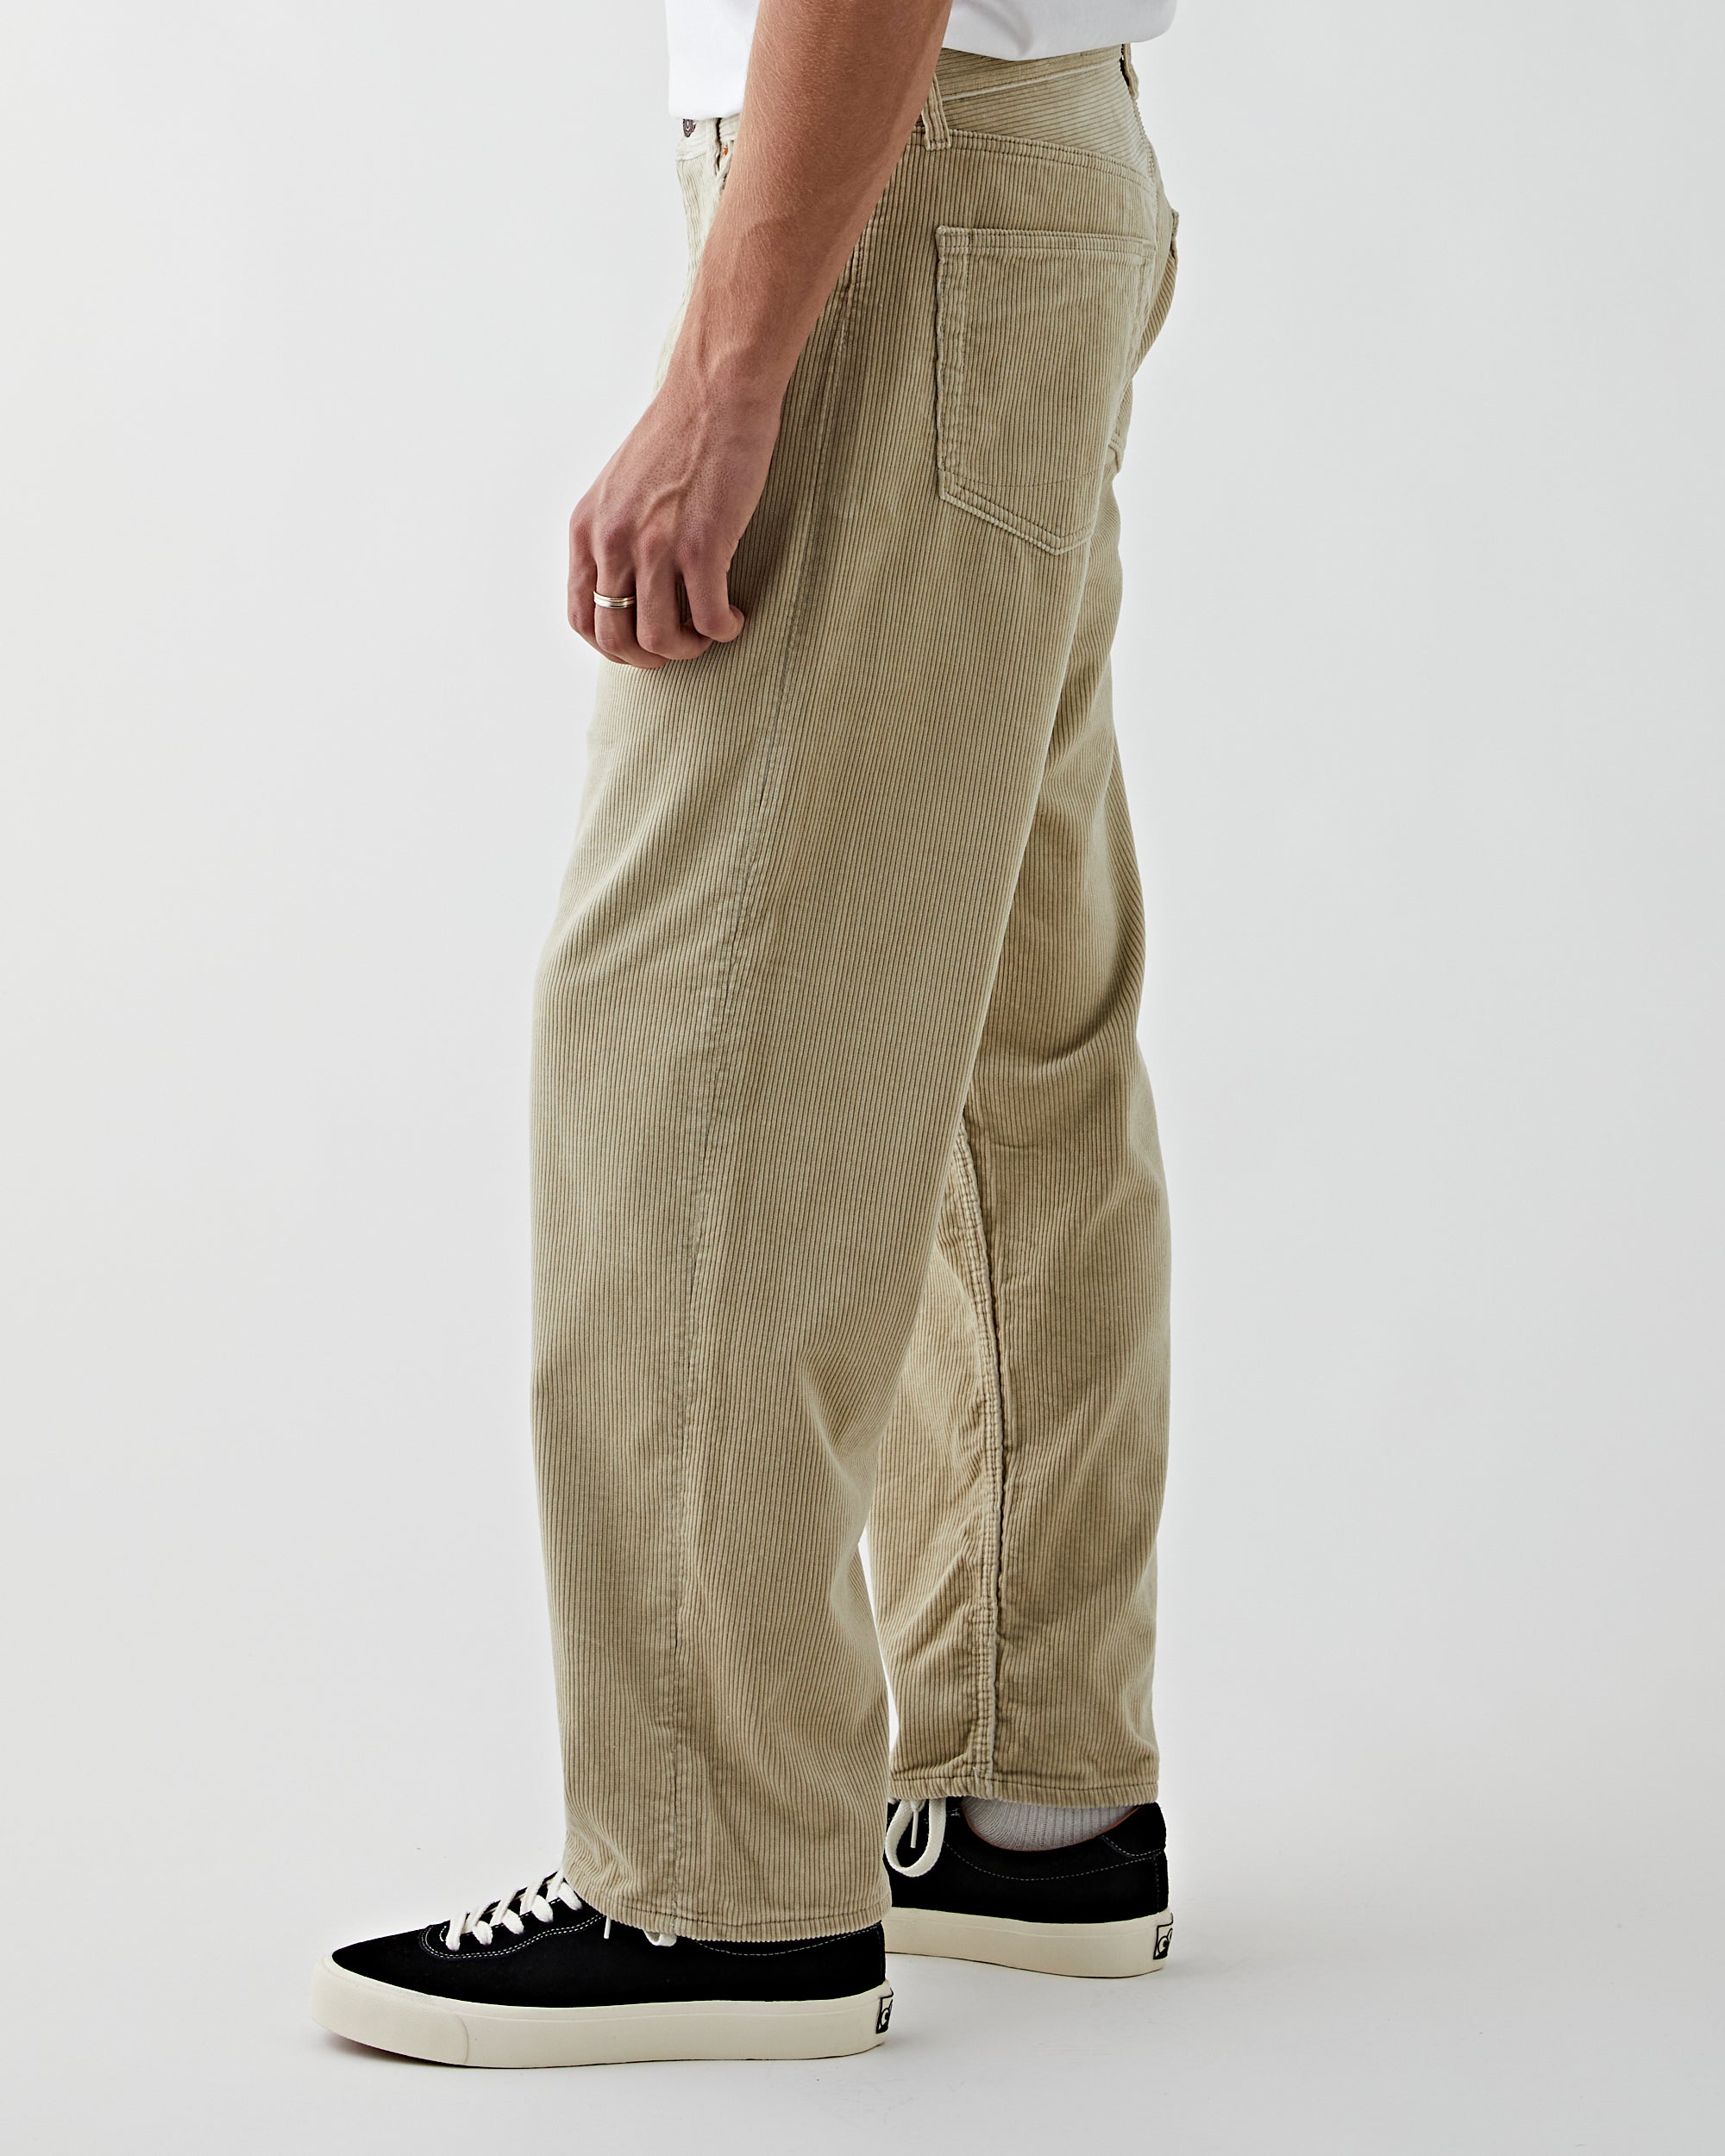 OrSlow 101 Dads Fit Corduroy Pants Ivory Pants Men